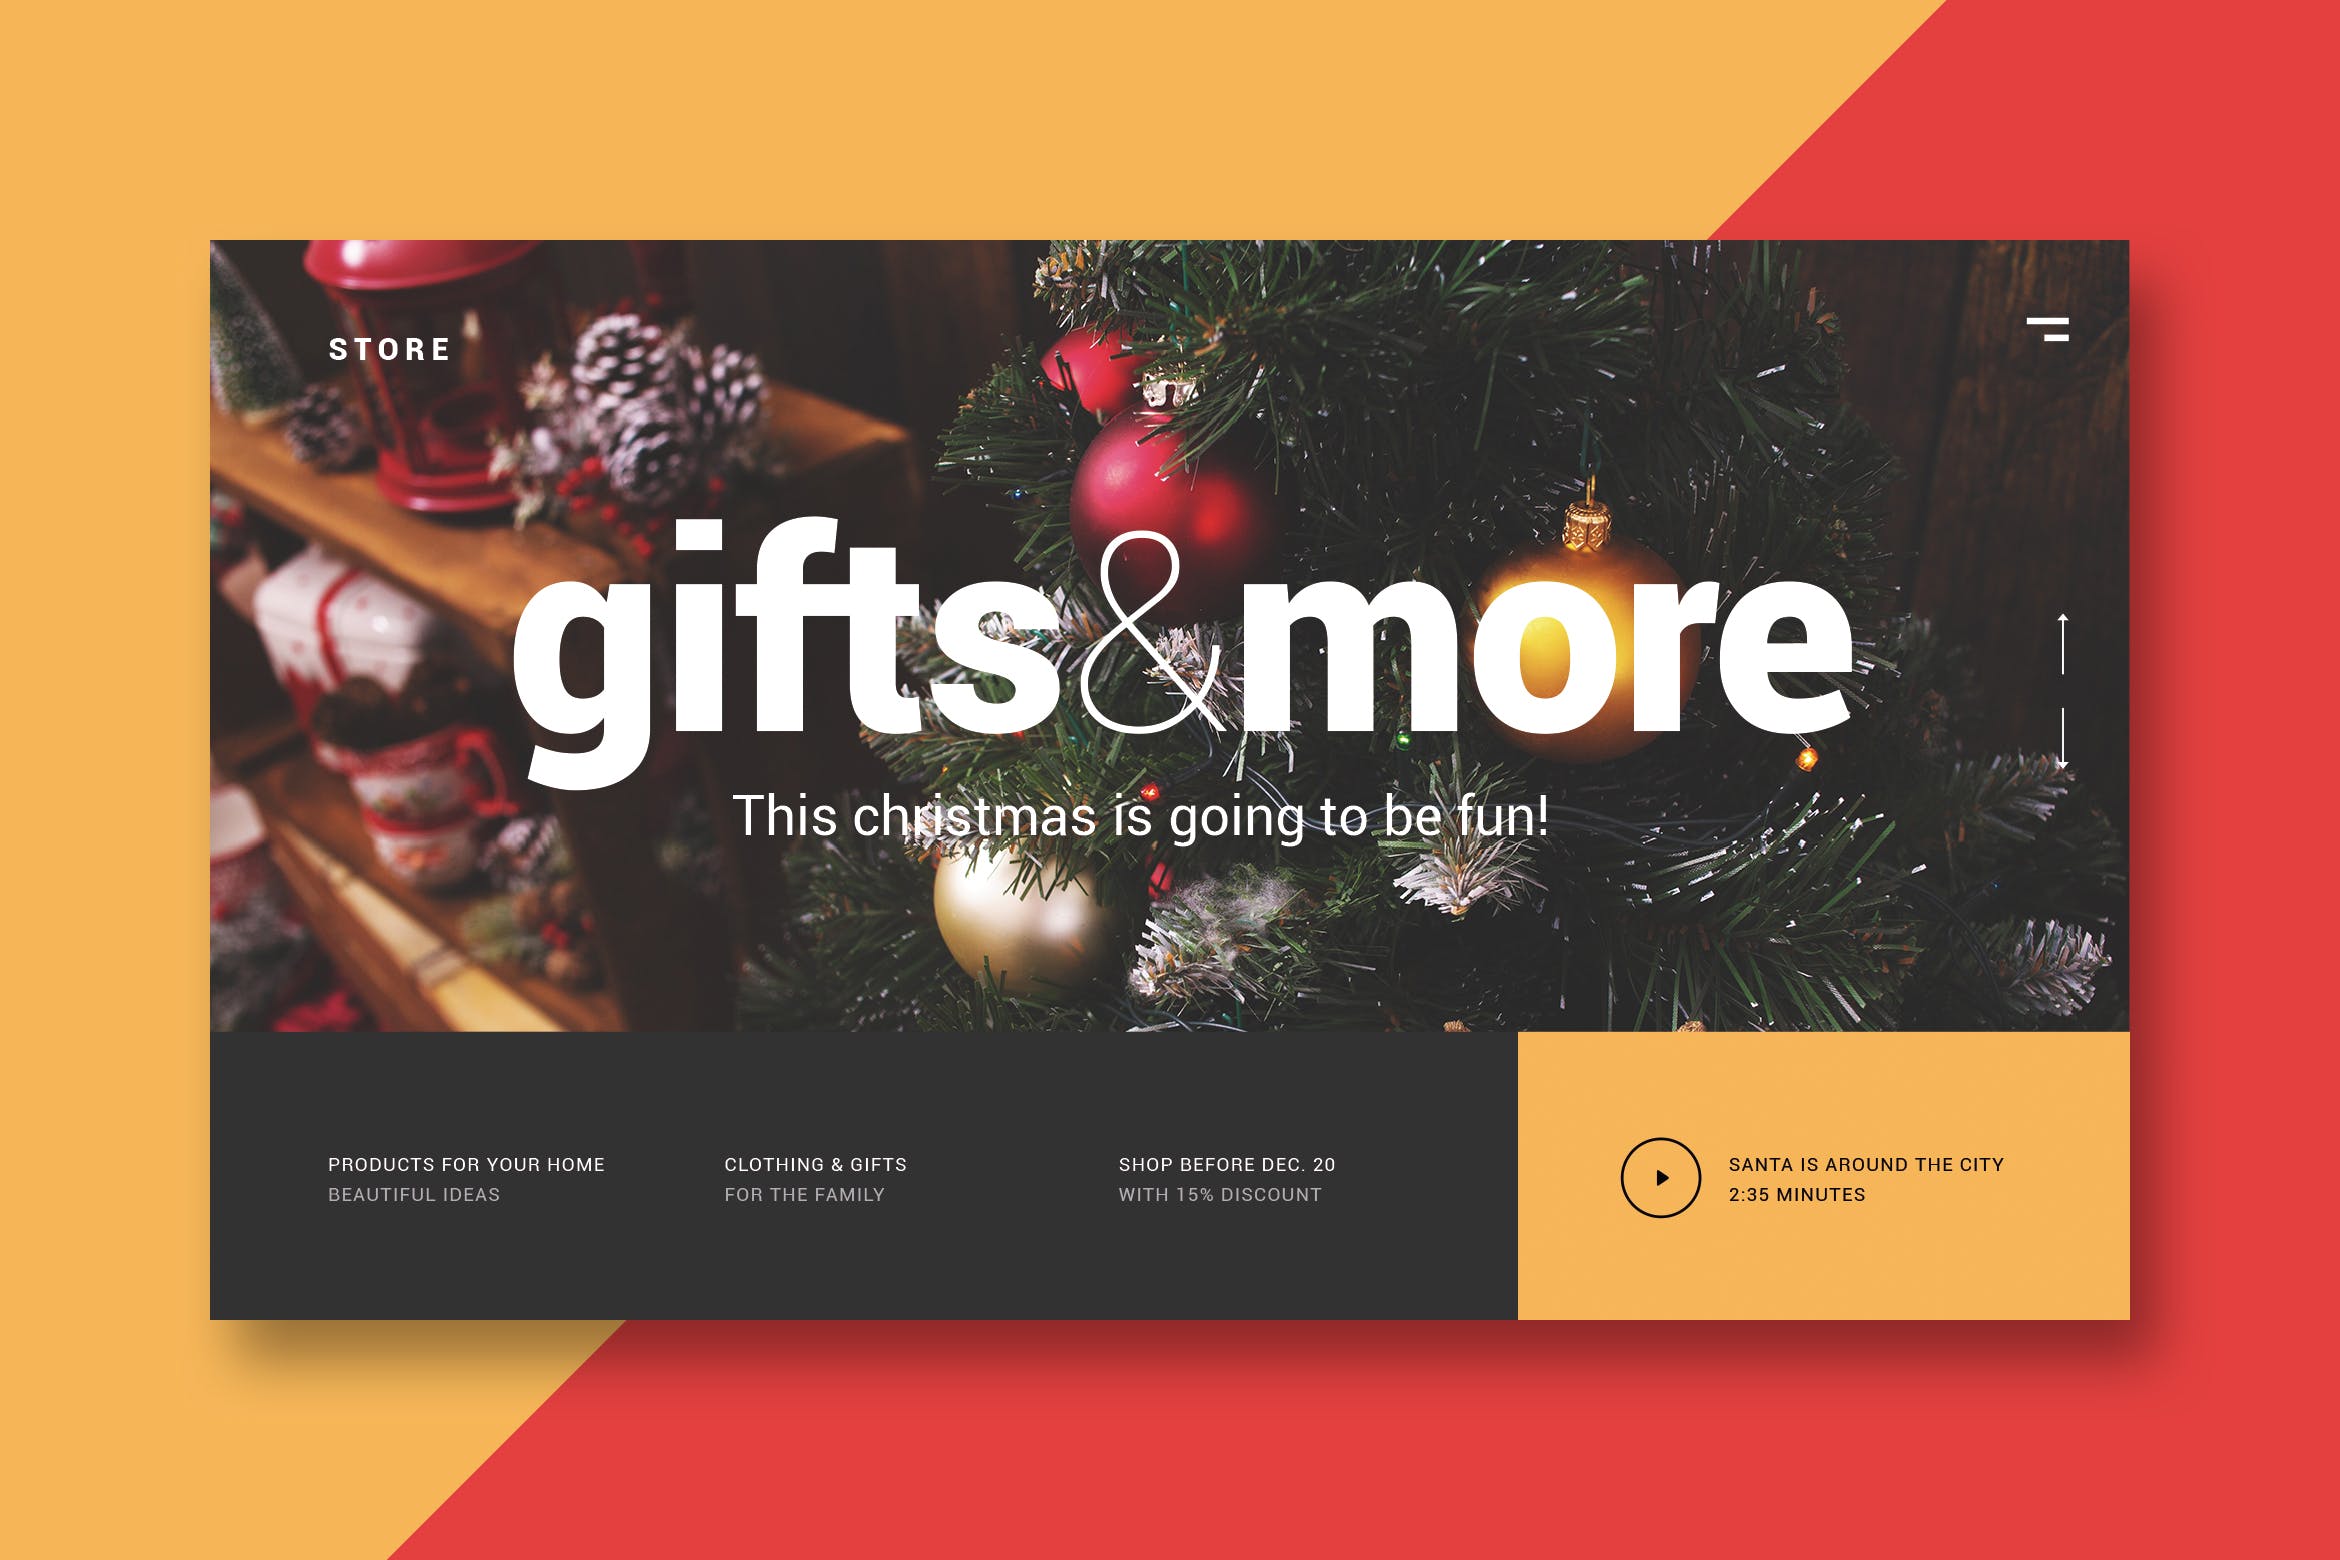 圣诞节礼物商店网站着陆页设计模板 Christmas Store – Landing Page插图